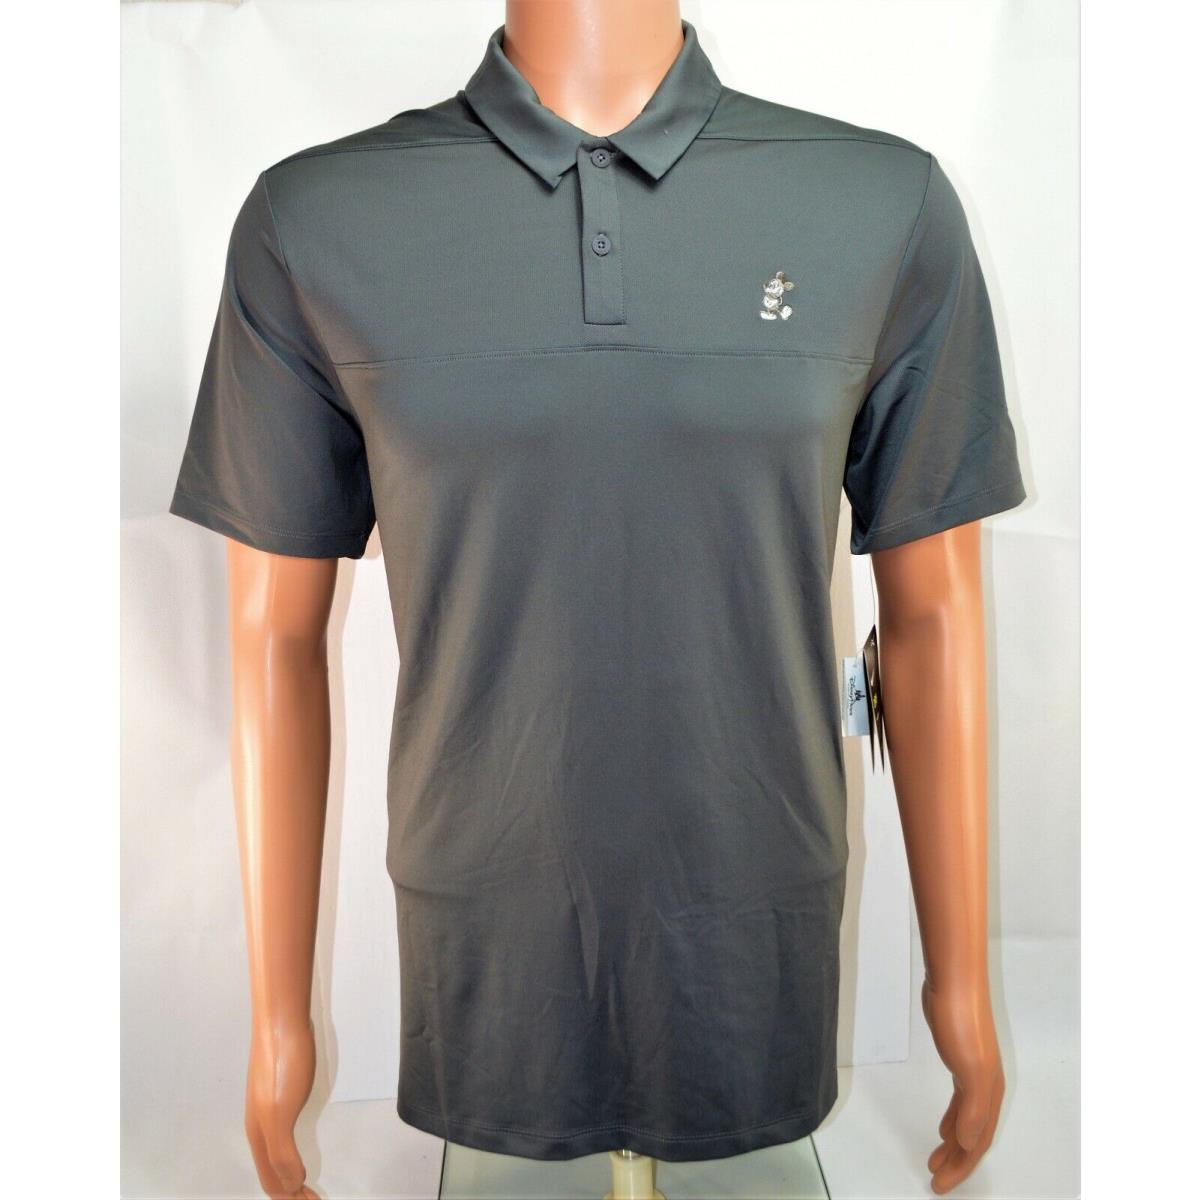 Disney Parks Exclusive Nike Golf Grey Polo Shirt Sz Small S 942881 021 Rare